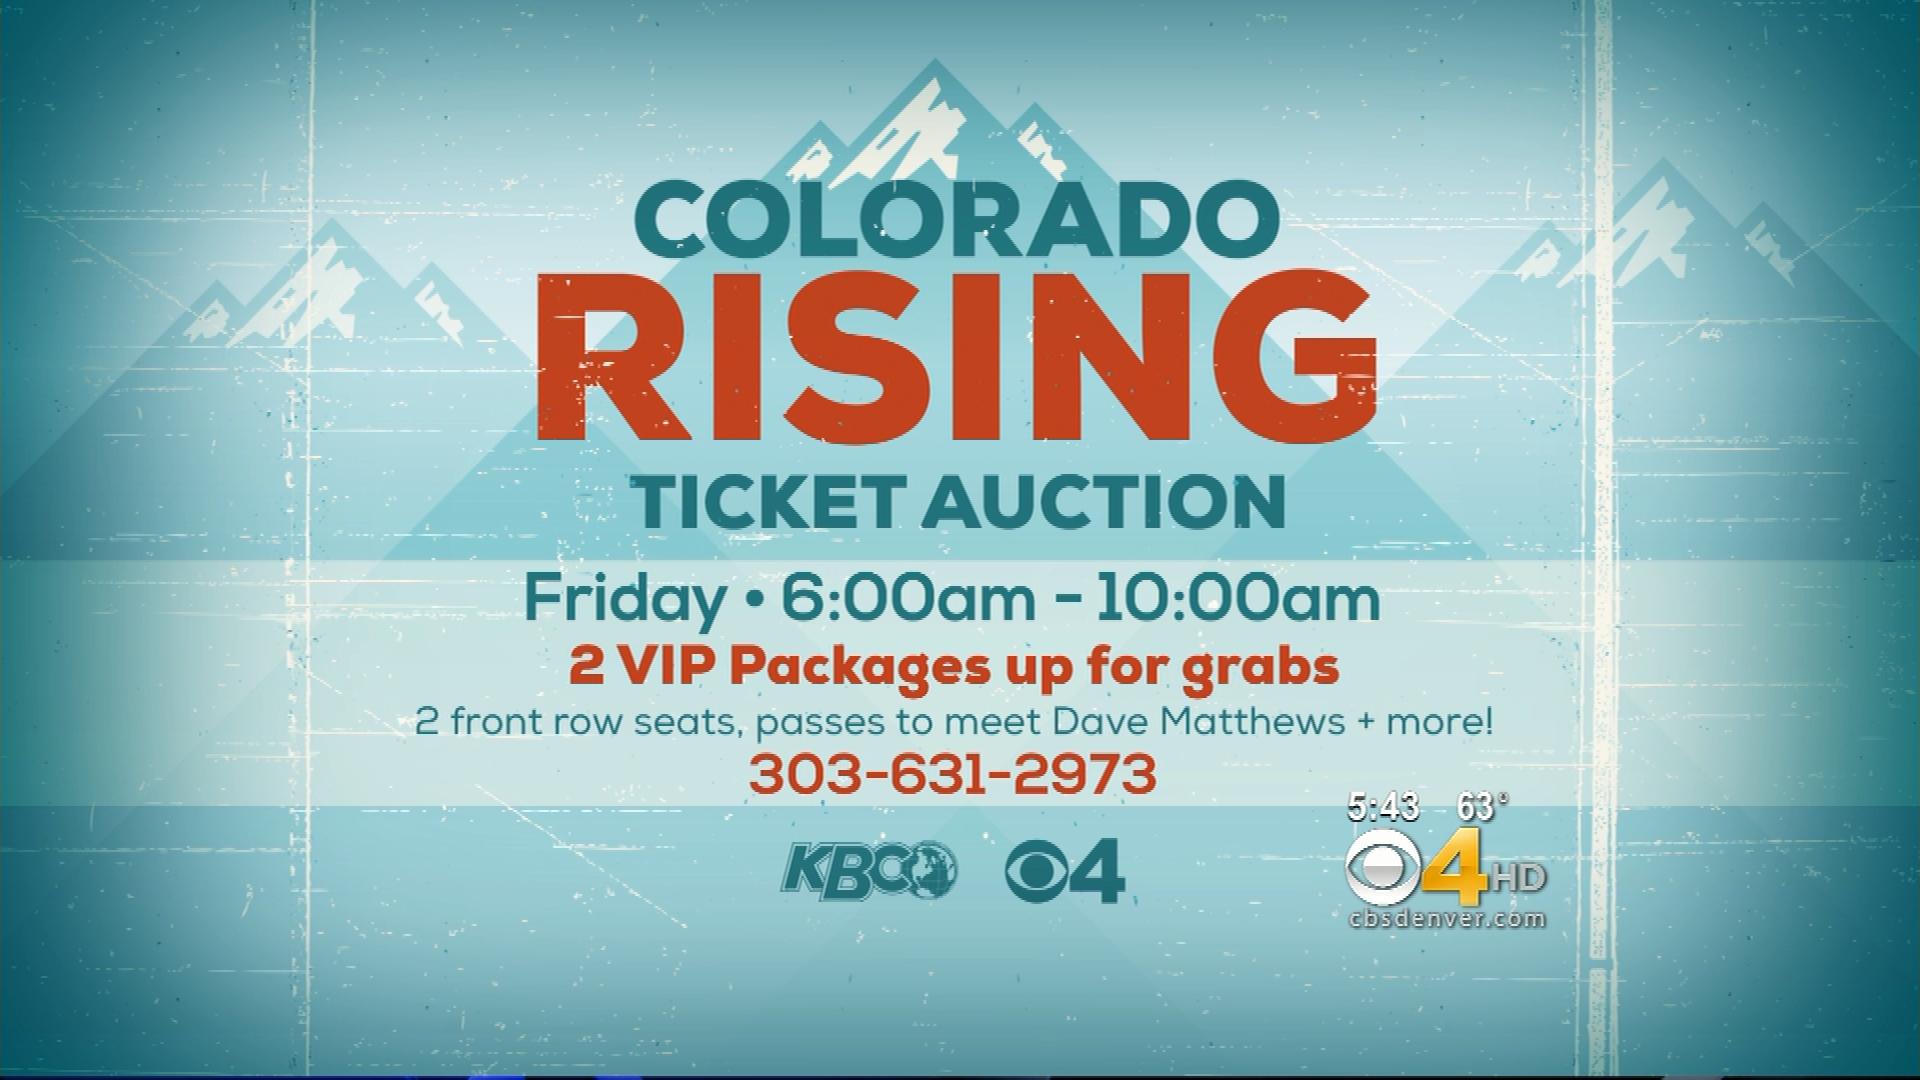 Colorado Rising Ticket Auction